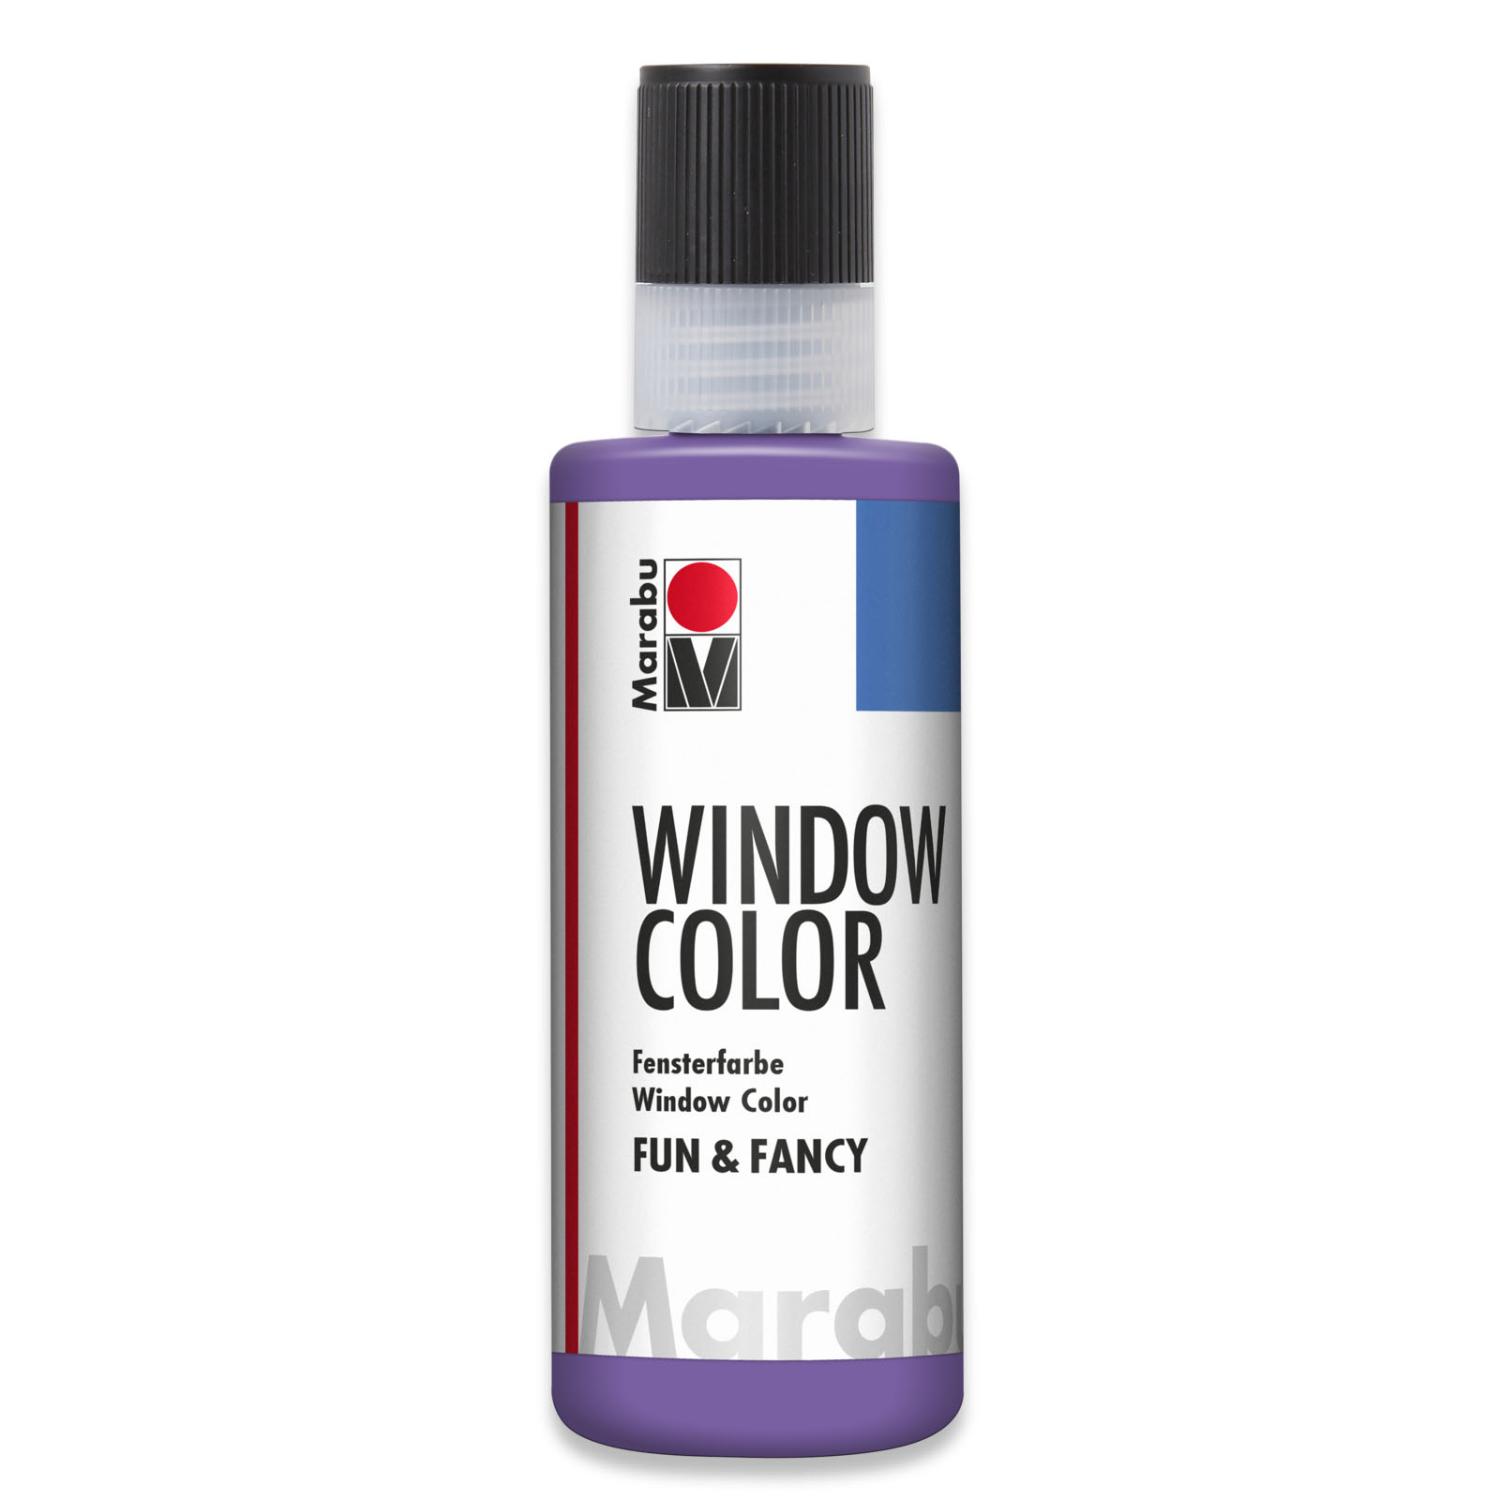 Marabu Window Color fun & fancy, 80 ml, lavendel